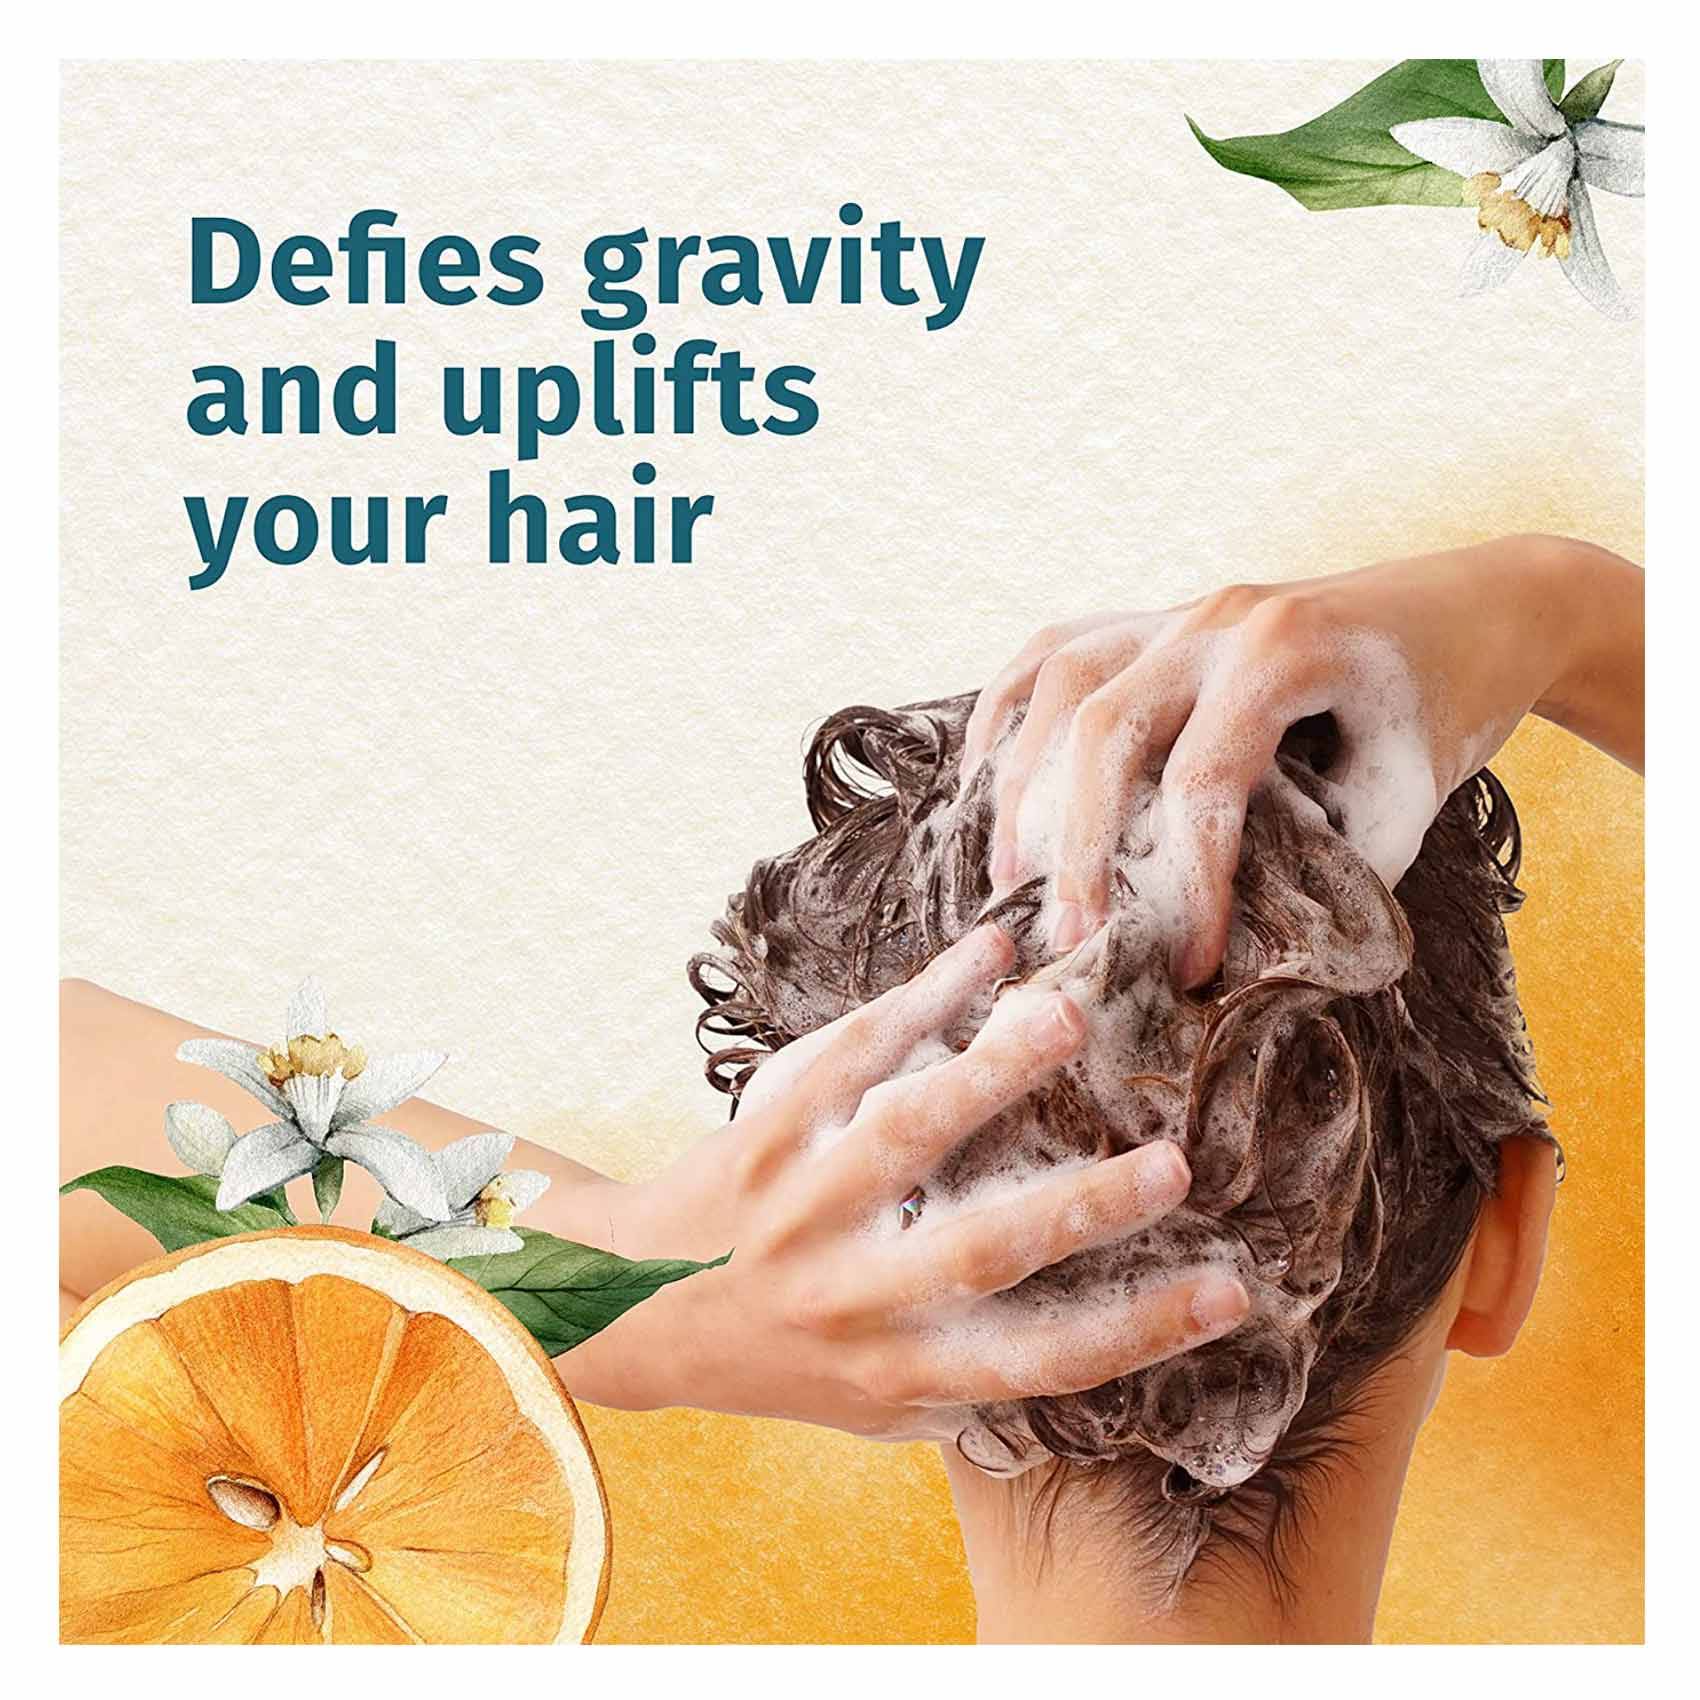 Herbal Essences Body Envy Lightweight Citrus Shampoo 700ml